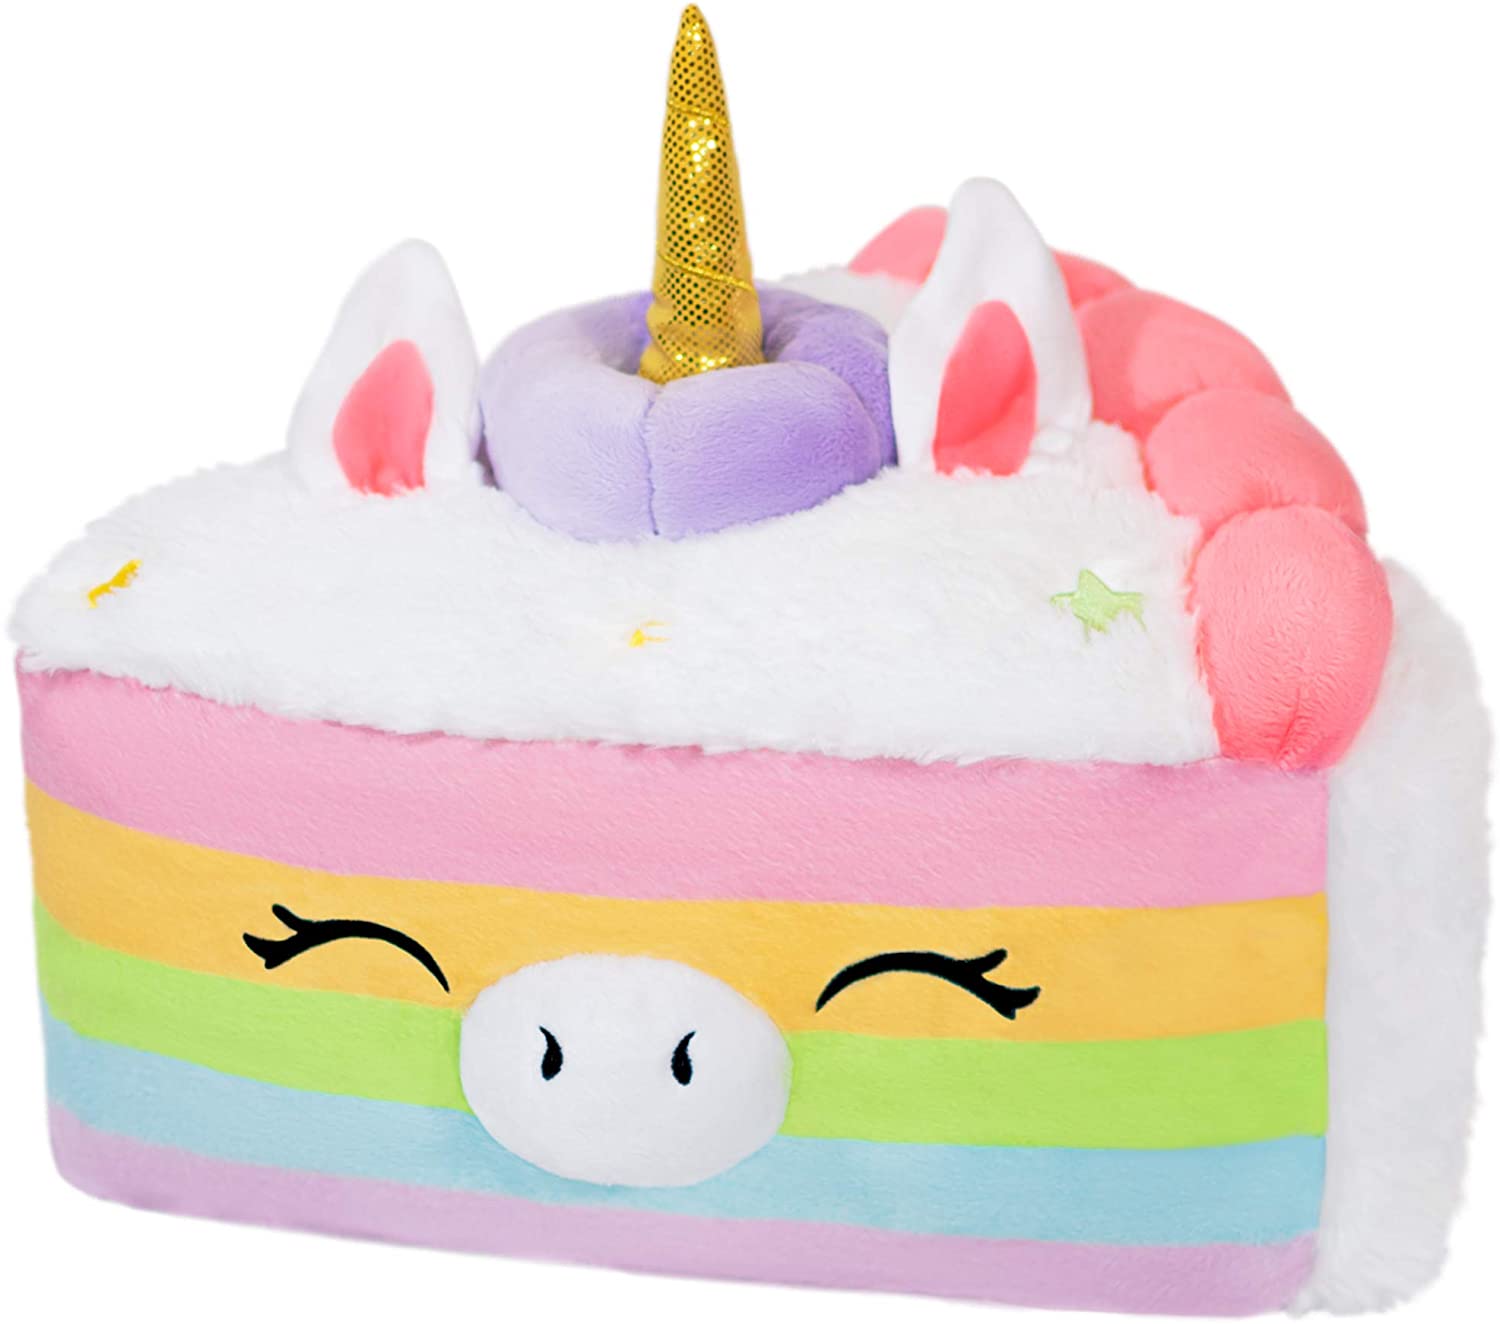 Comfort Food: Unicorn Cake - Ages 3+